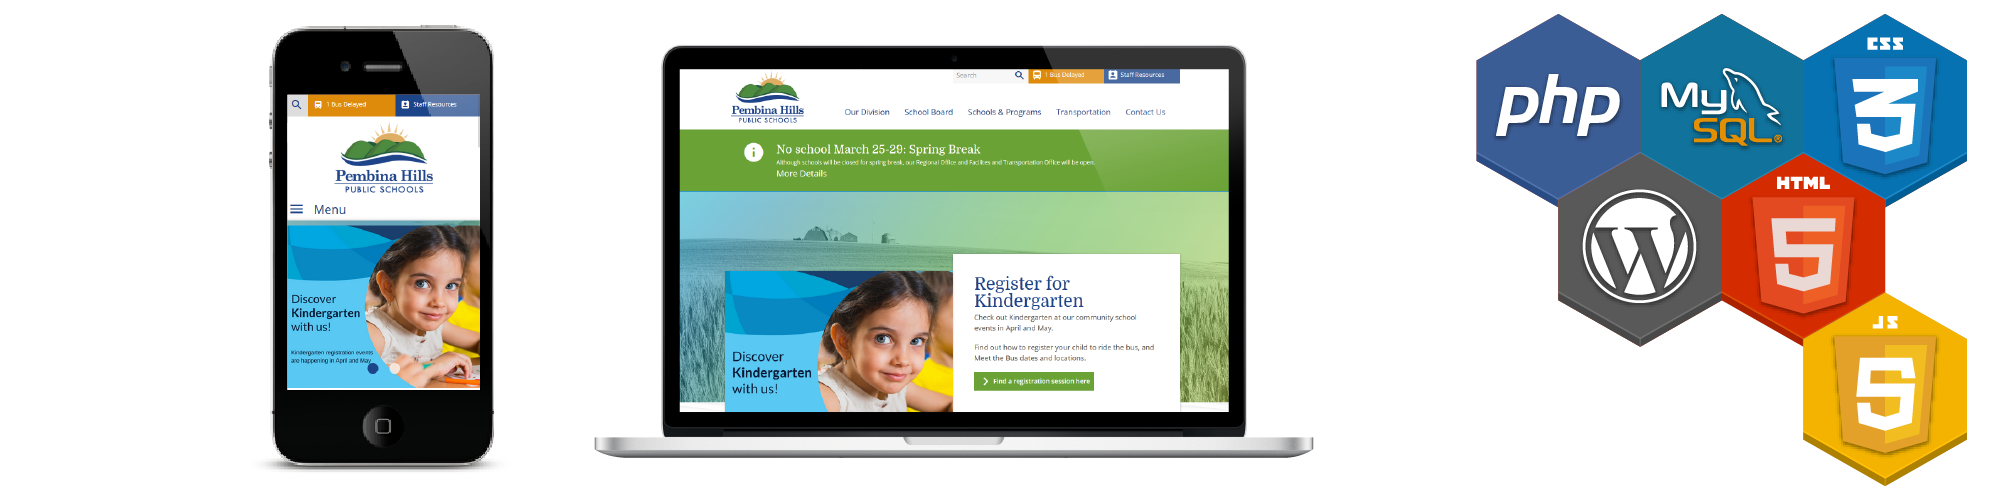 Pembina Hills Public School Website